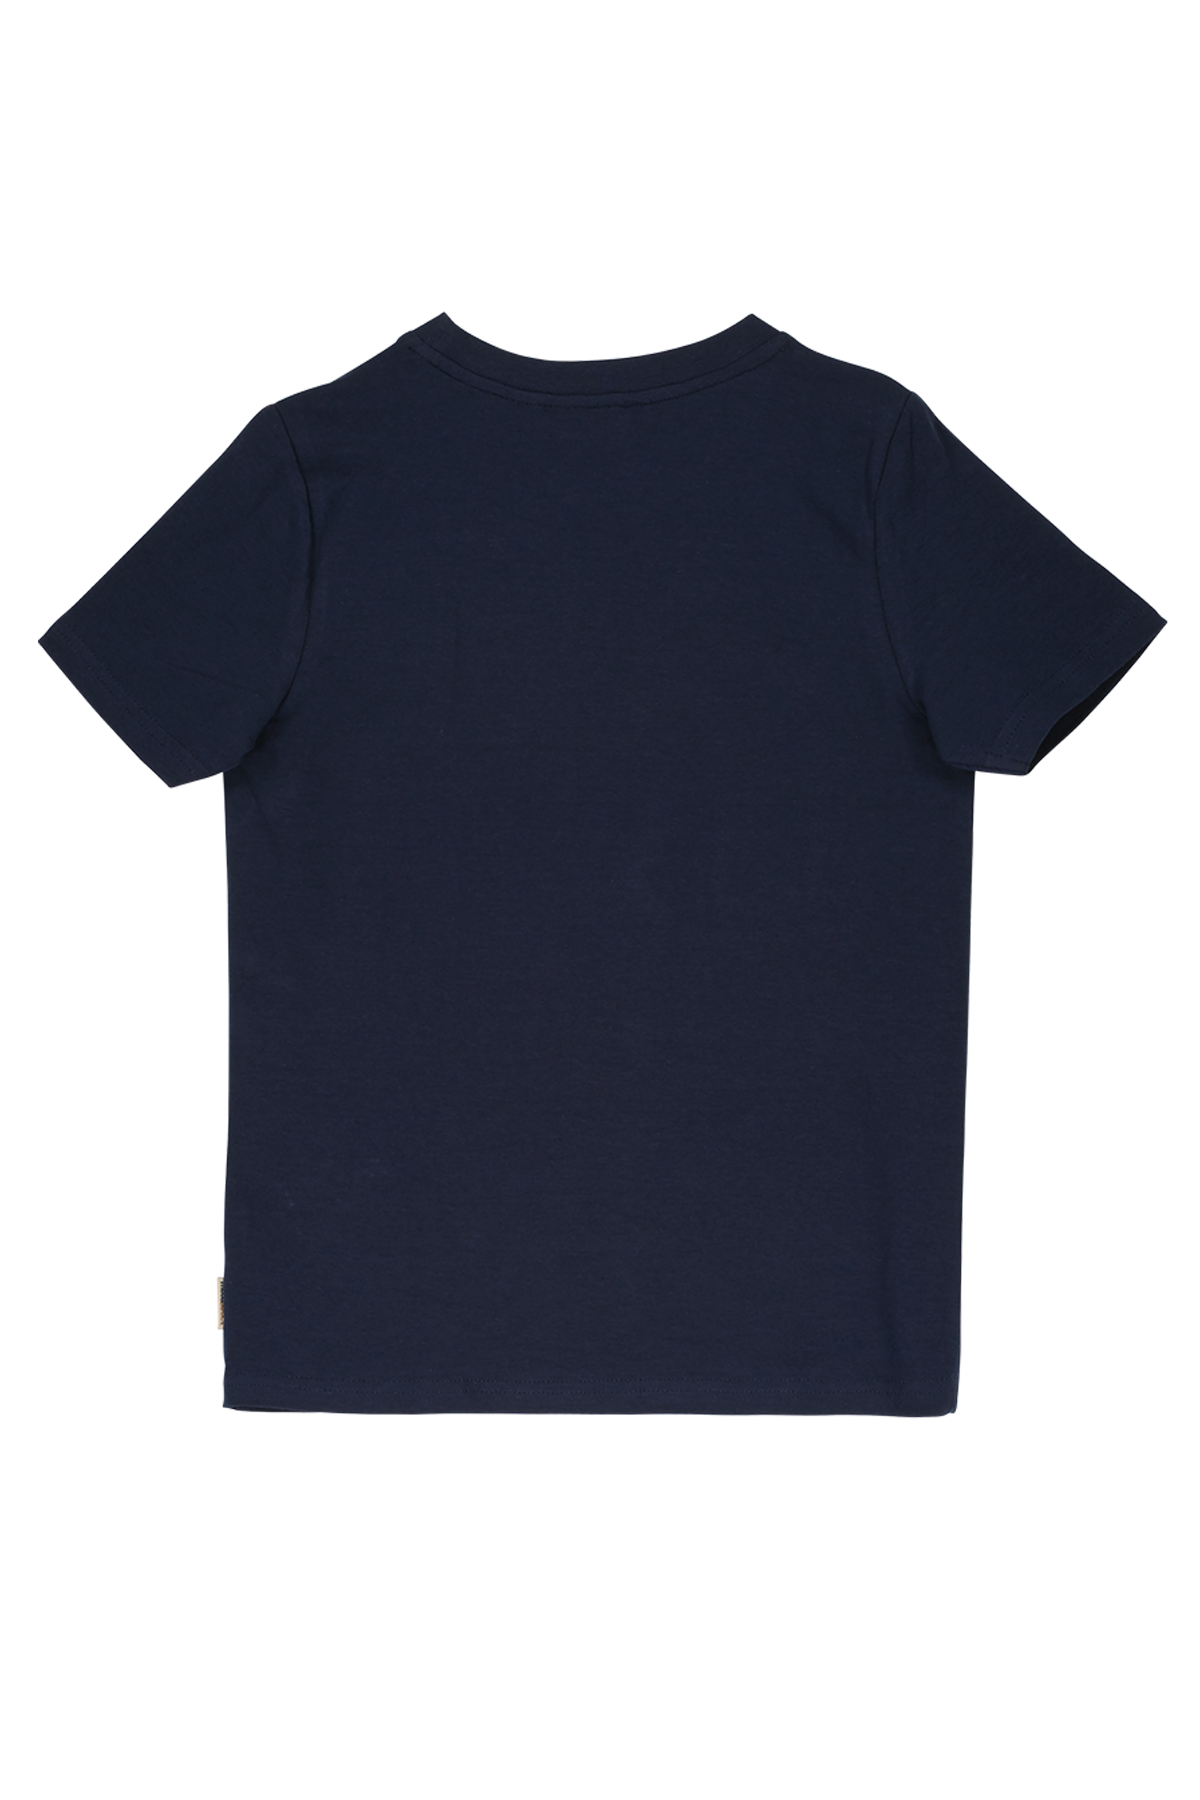 T-Shirt Boys t-shirt navy